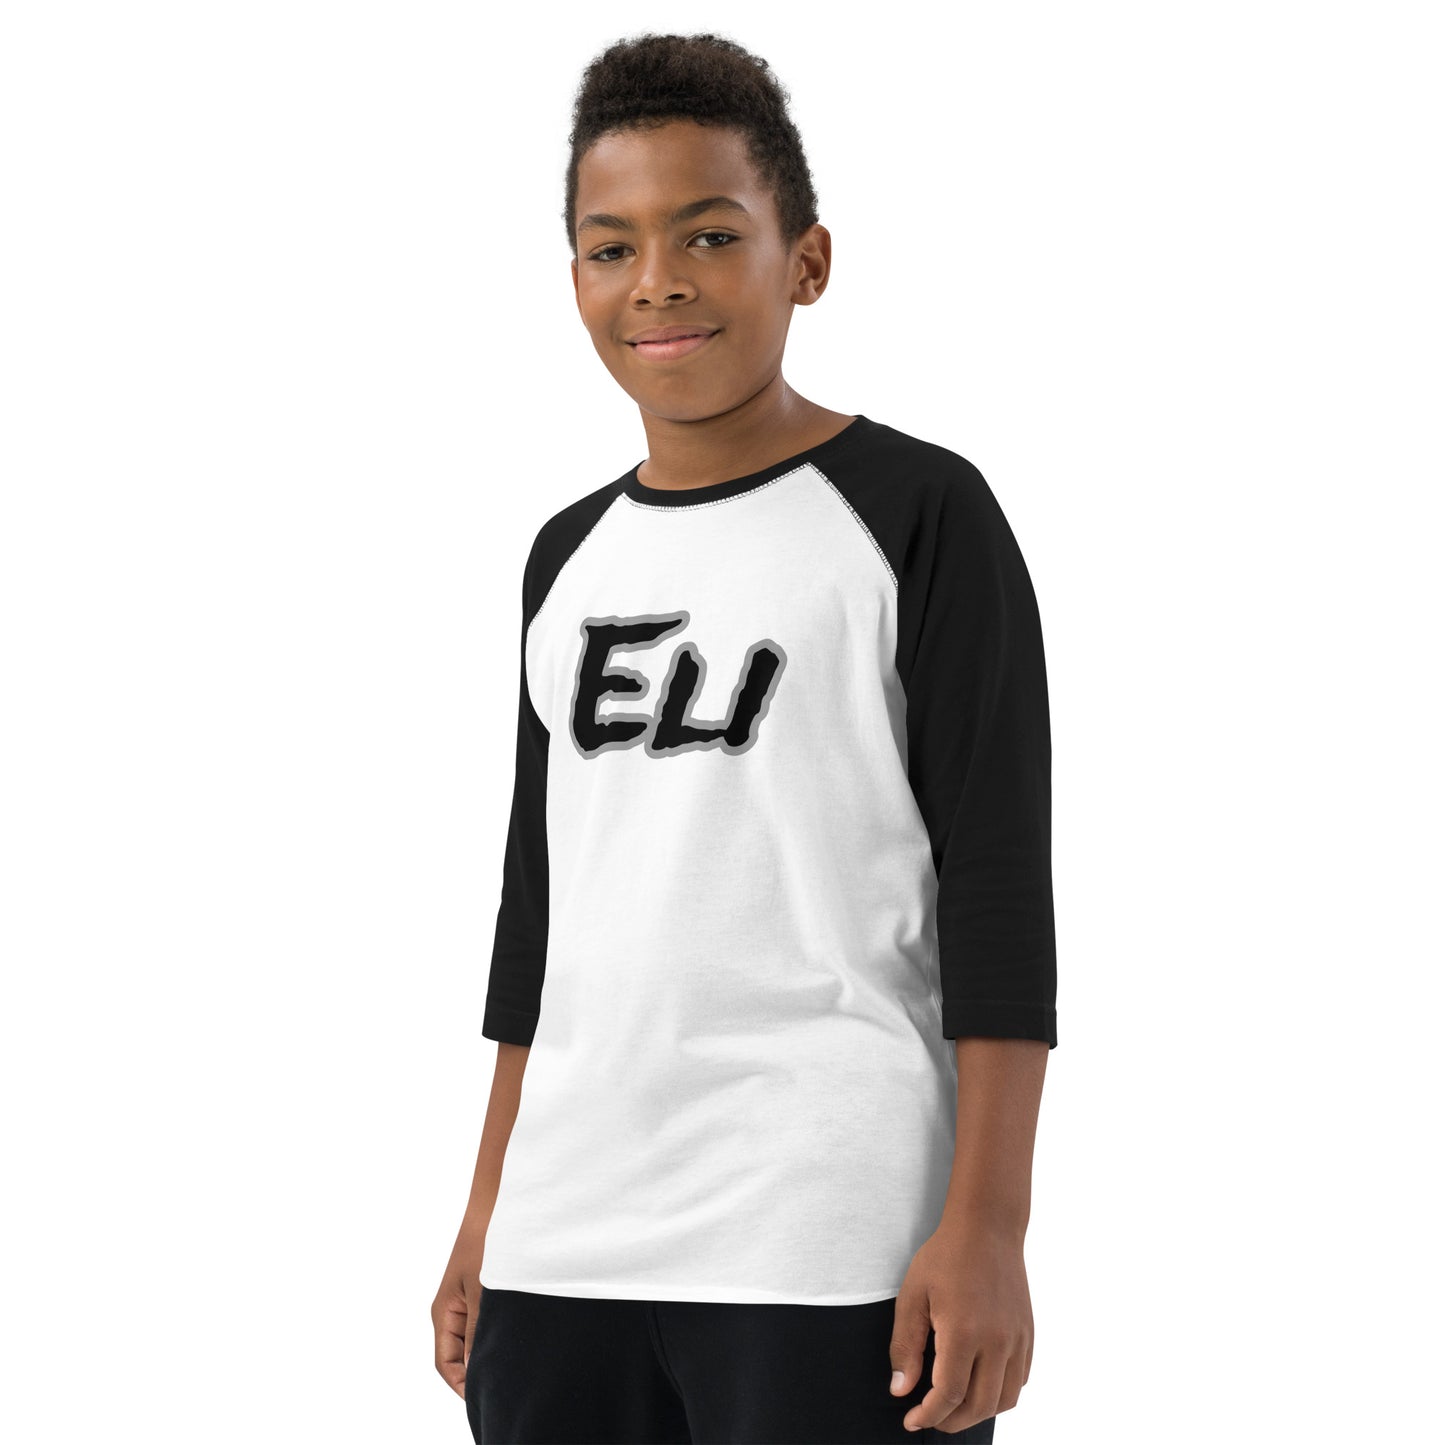 Eli baseball shirt CUSTOM MADE